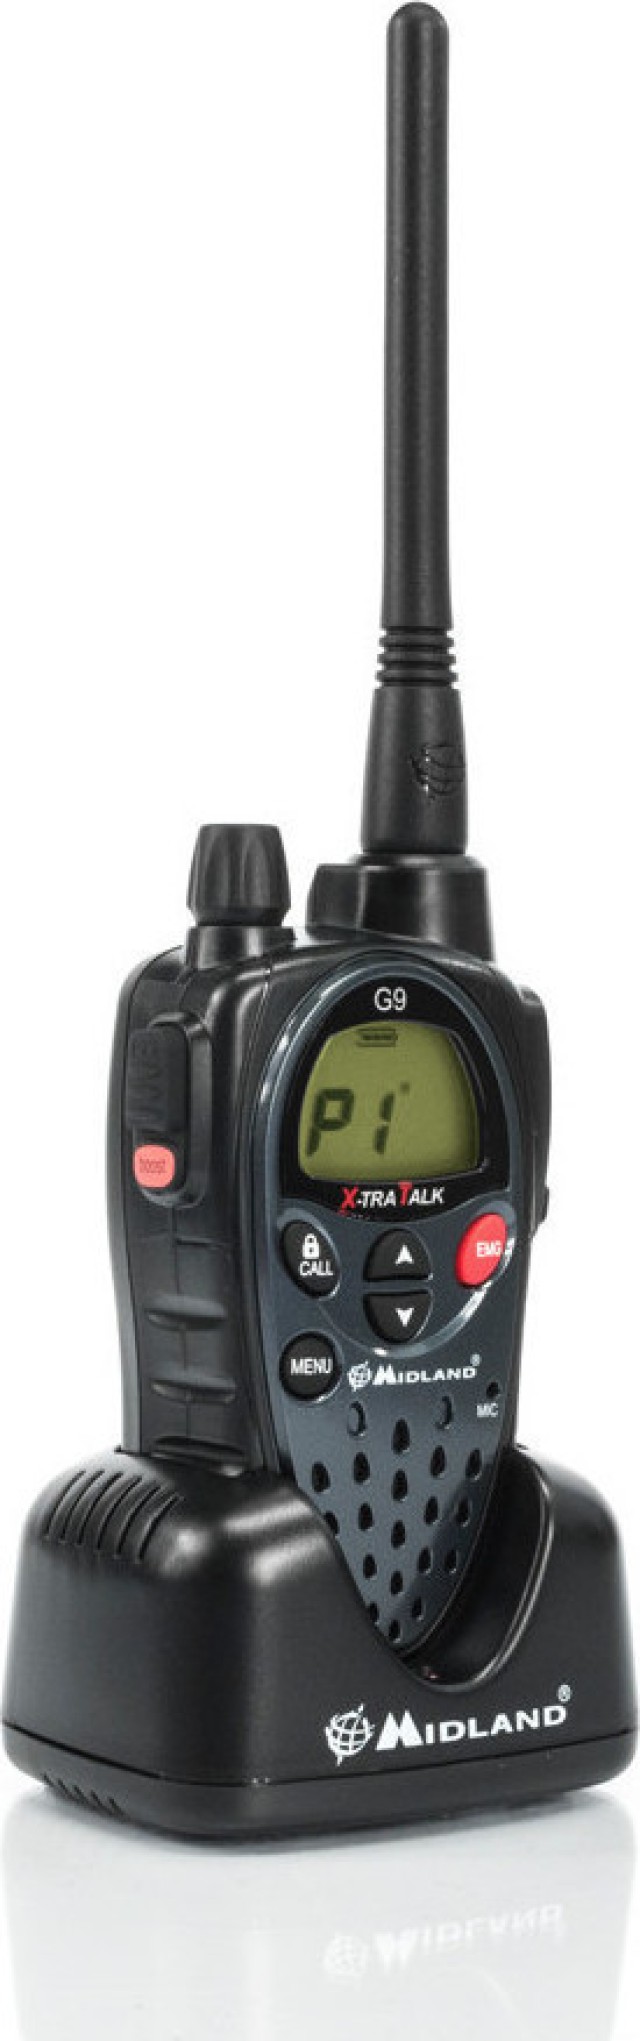 Midland G9 Plus Portable professional transceiver